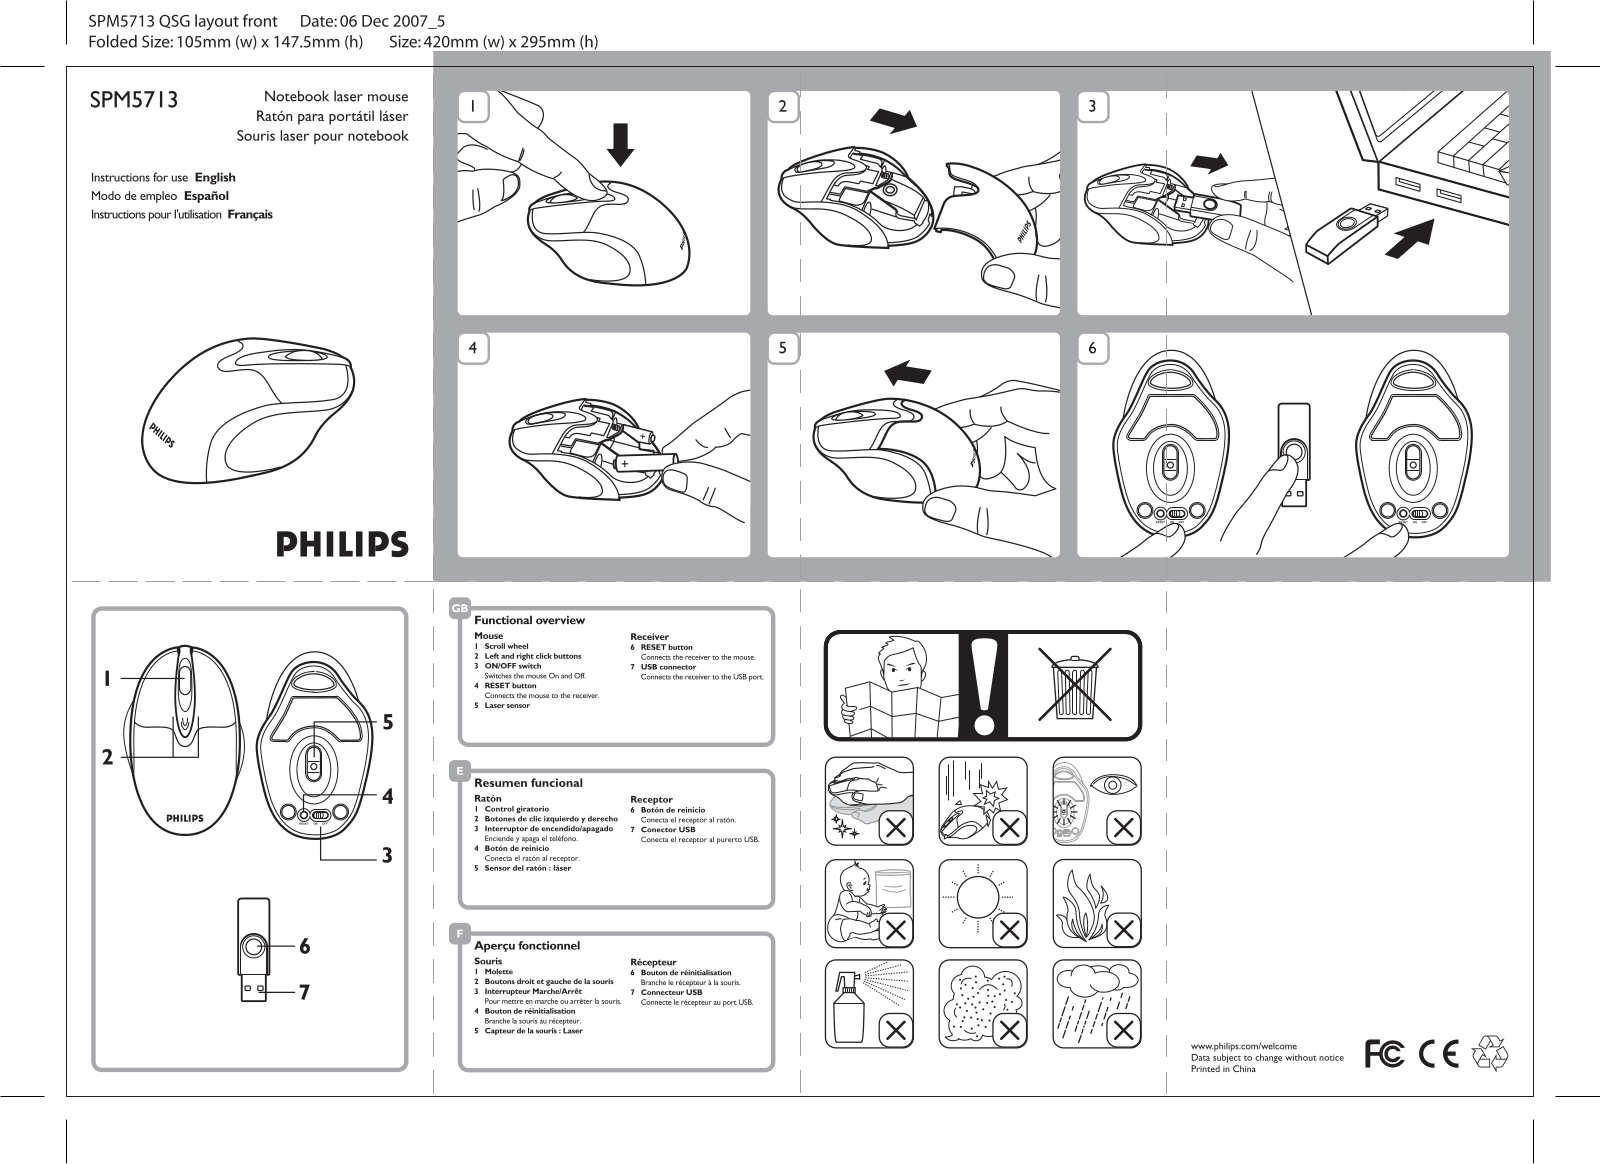 Philips SPM5713 User Manual